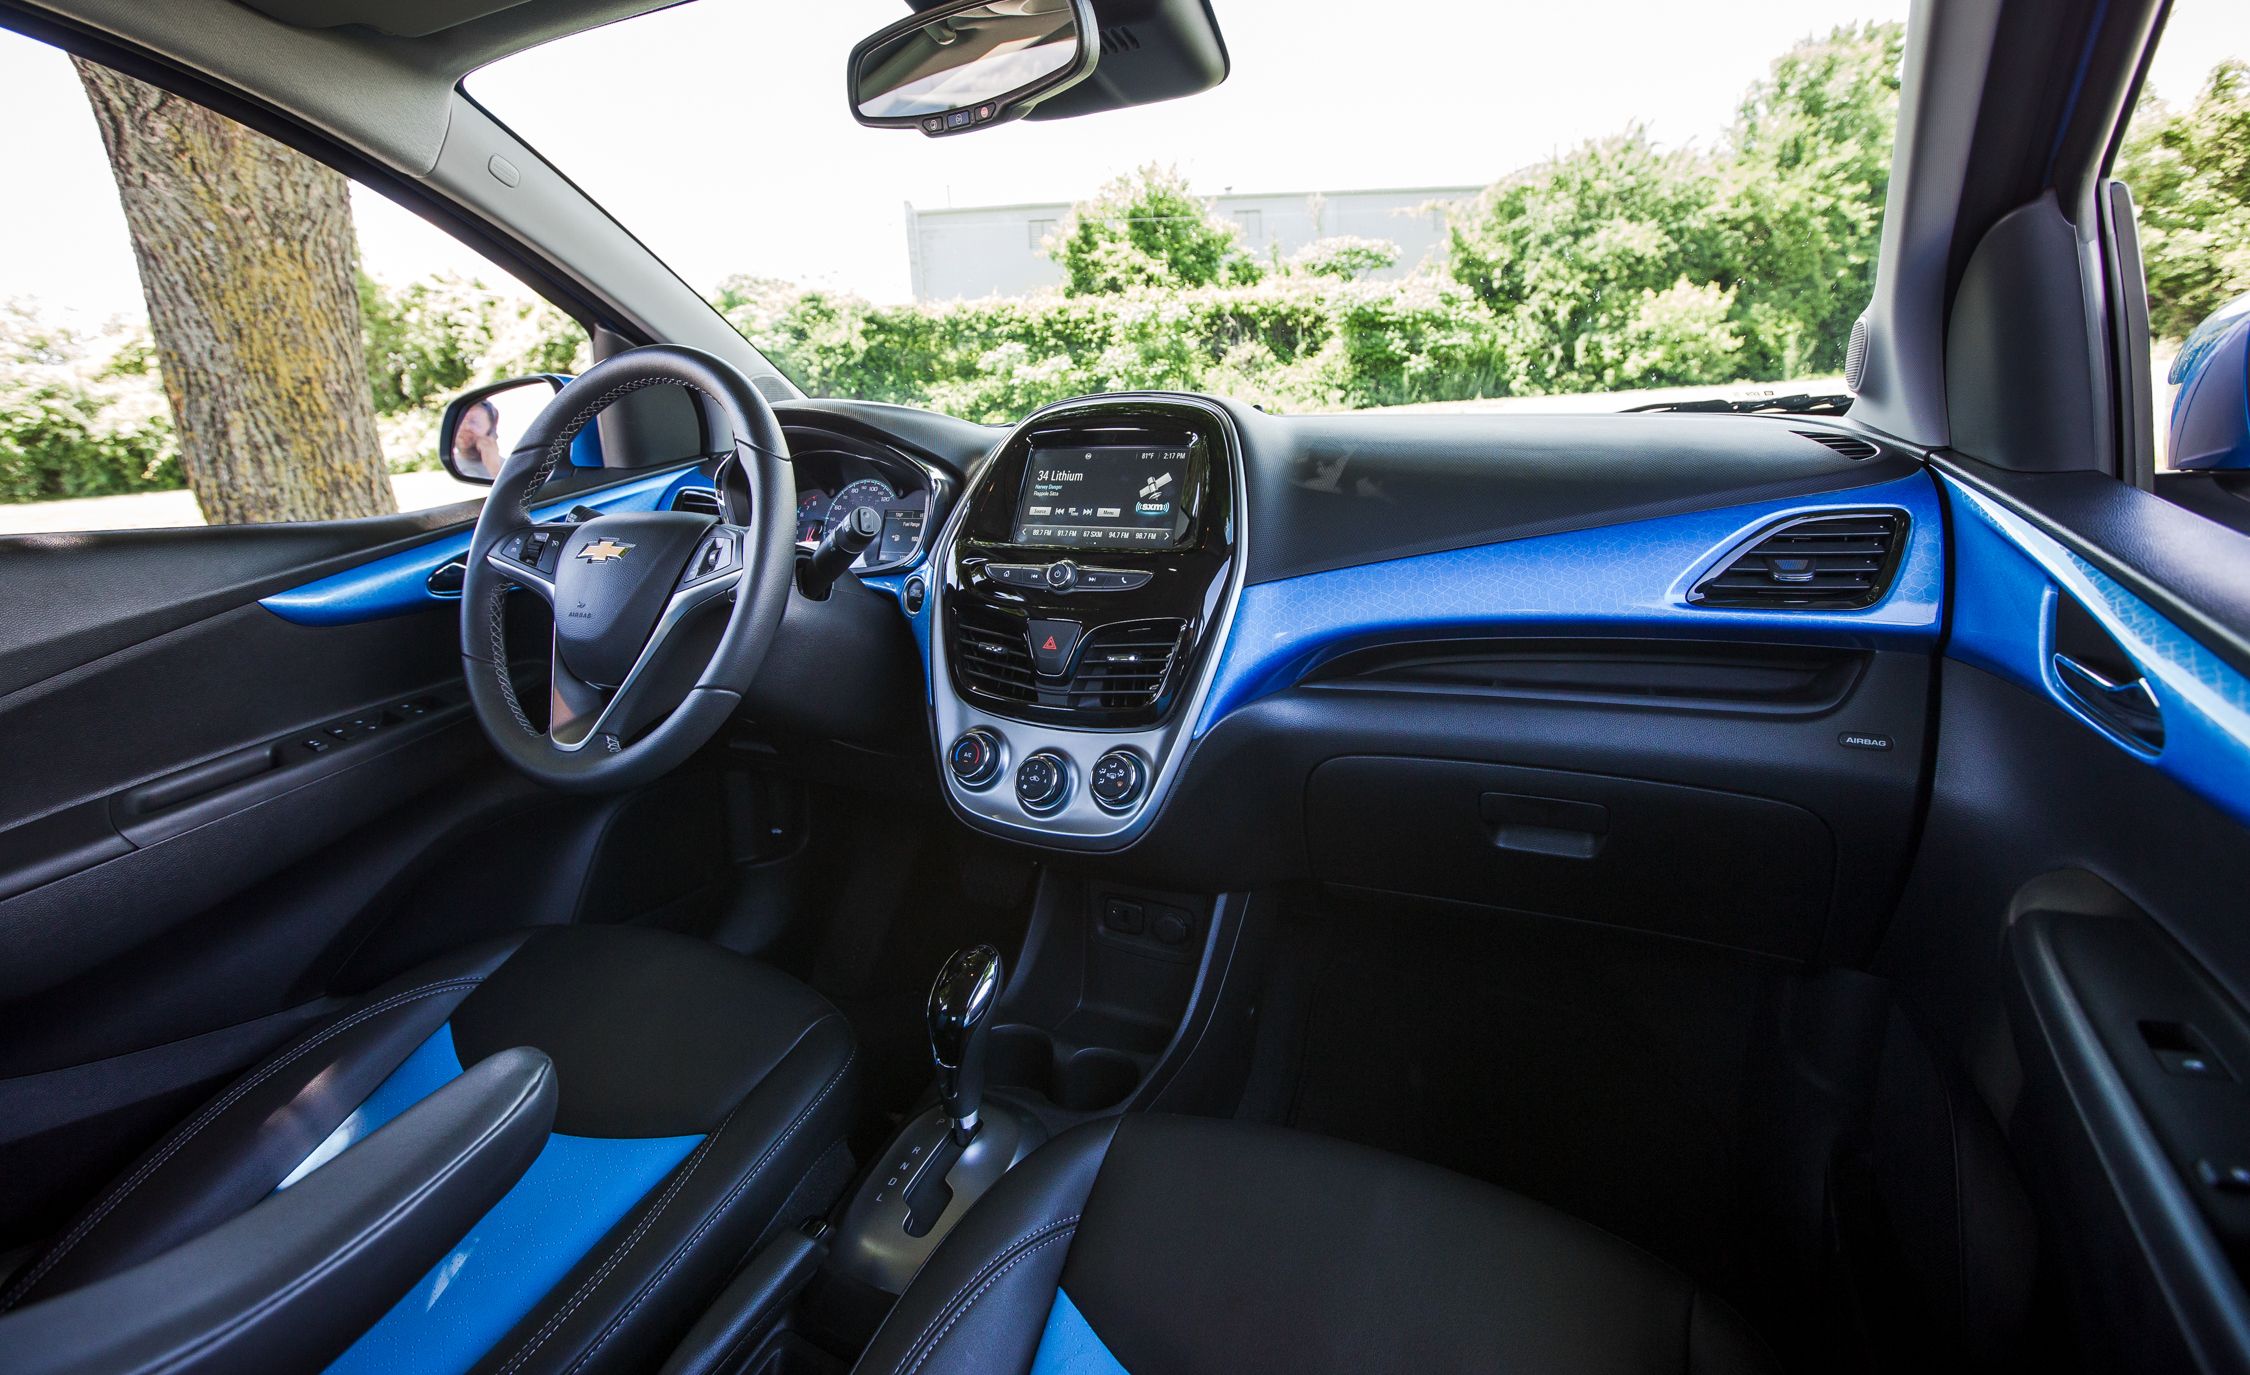 Tested: 2016 Chevrolet Spark CVT Automatic